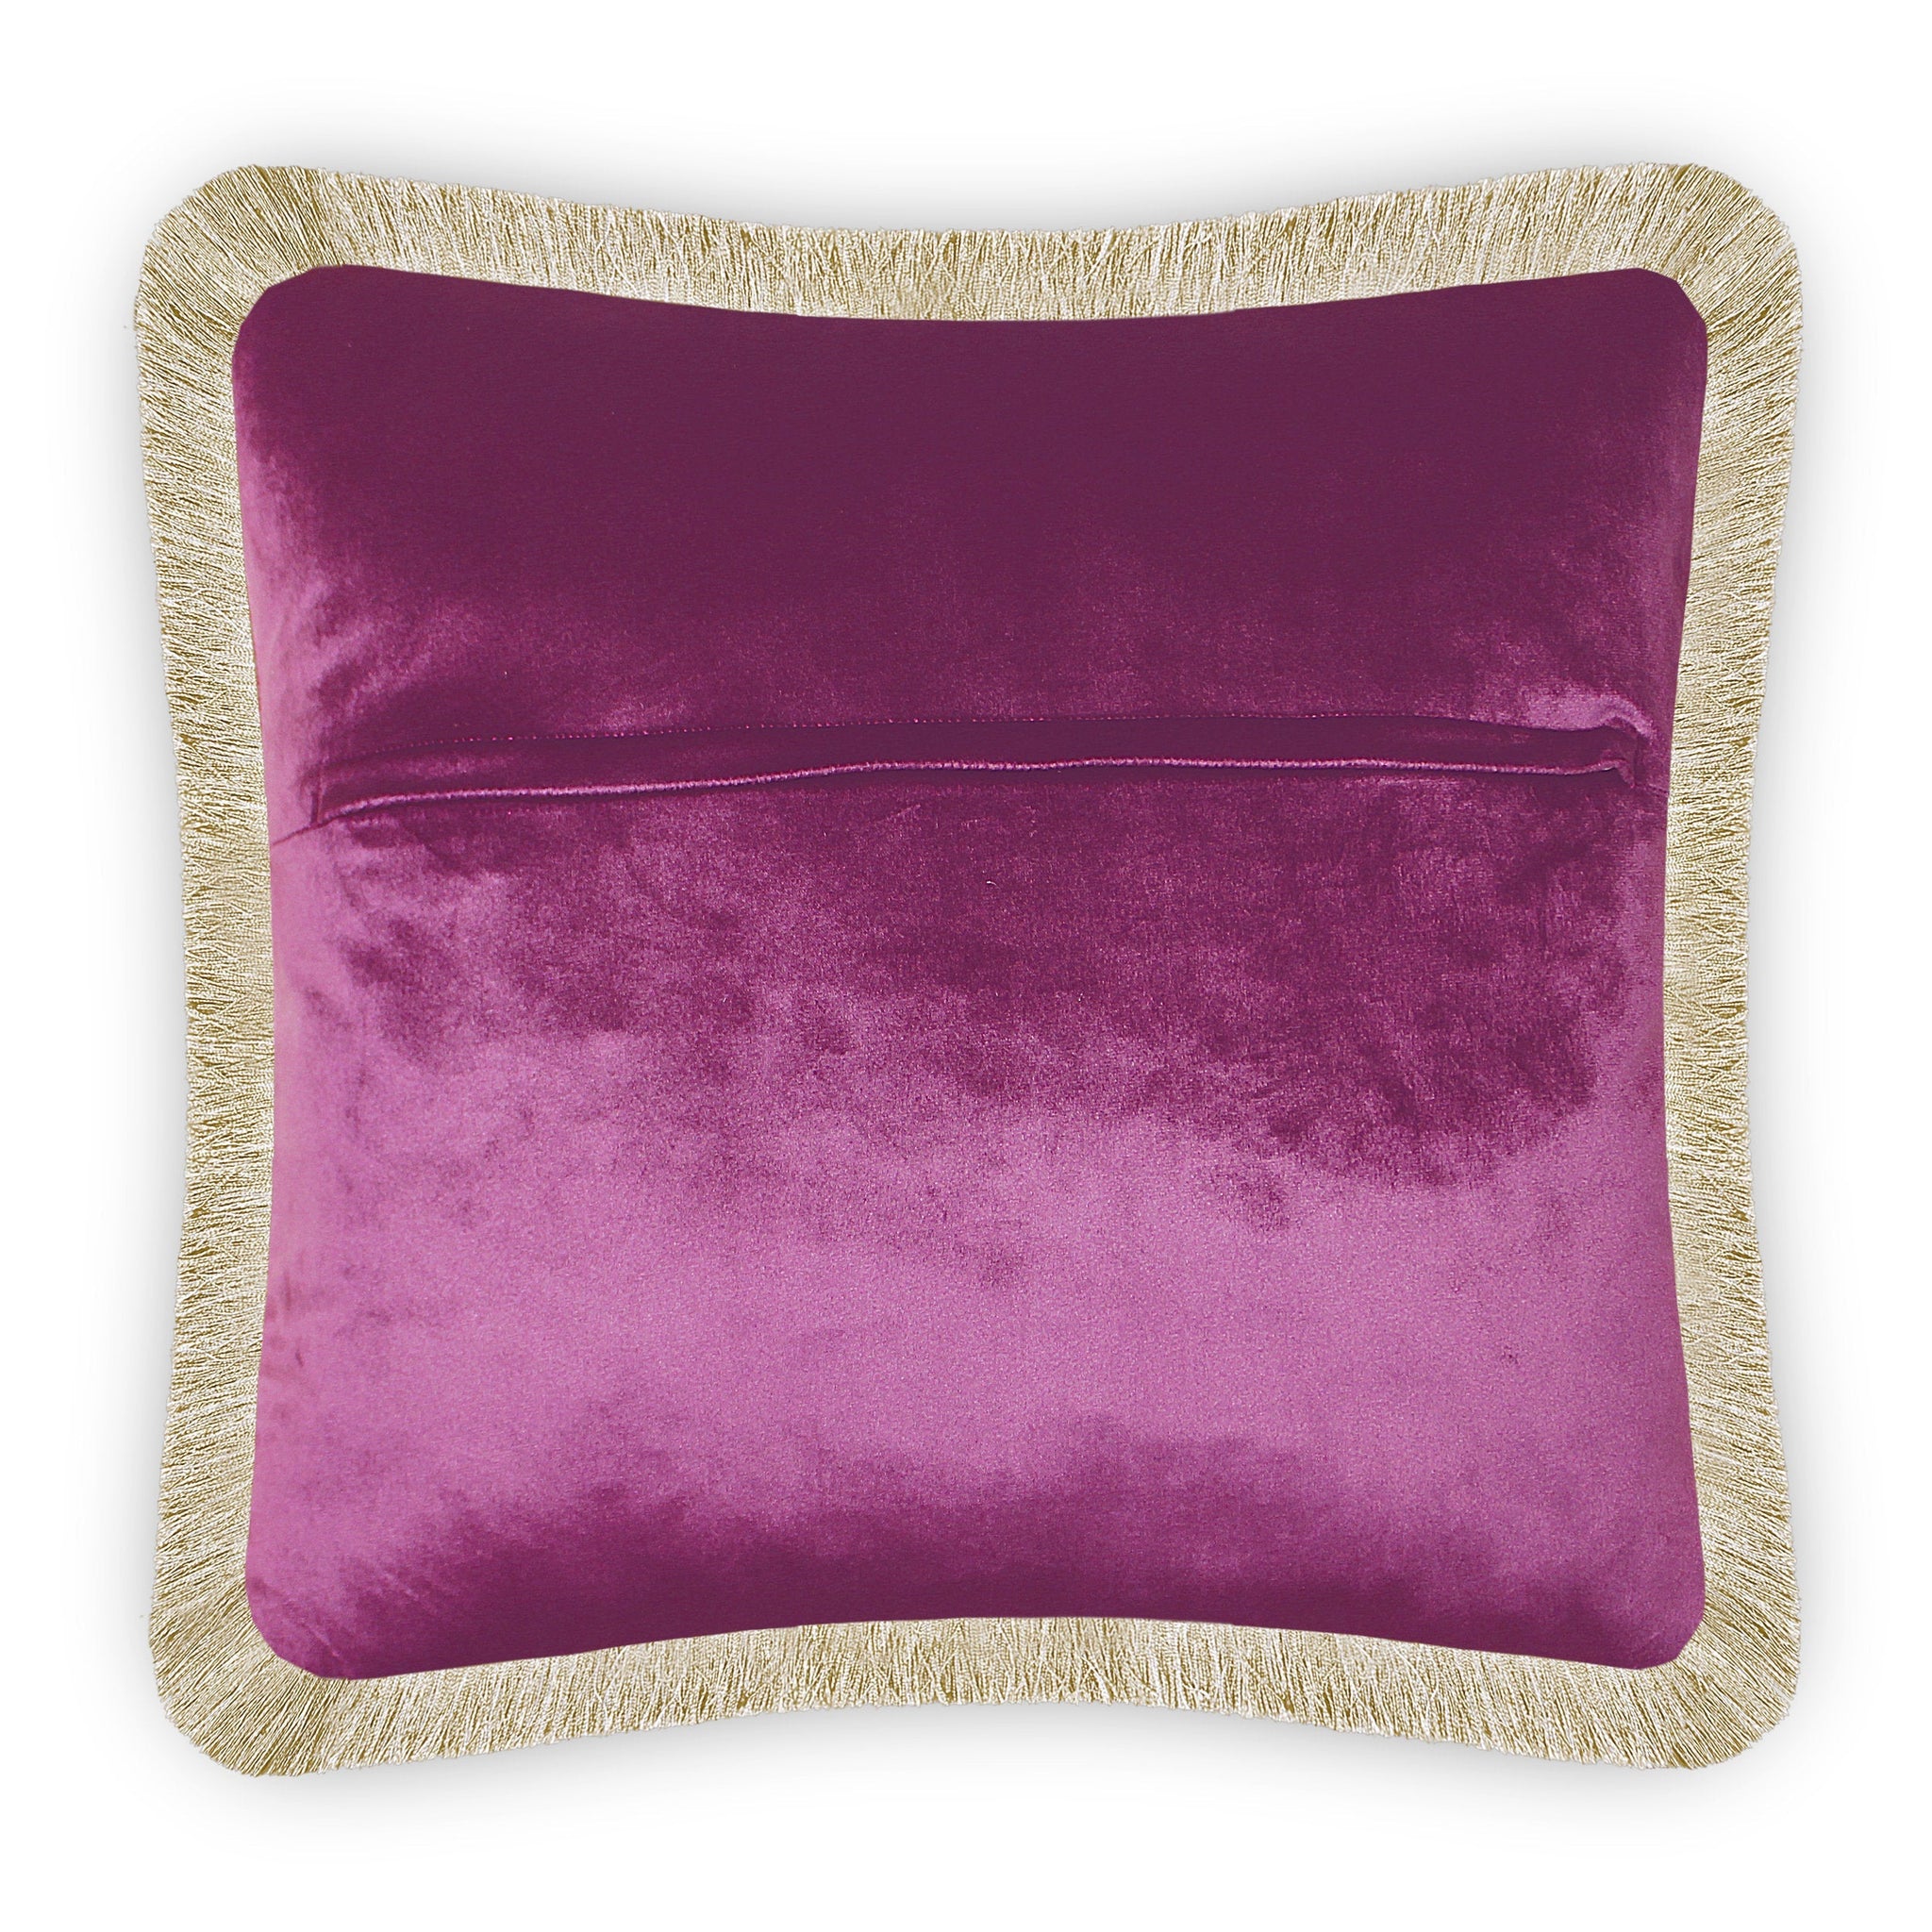  Velvet Cushion Cover Baroque Horse Decorative pillowcase Classic Motif Décor Throw Pillow for Sofa Chair Bedroom Living Room Fuchsia 45x45cm (18x18 Inches)